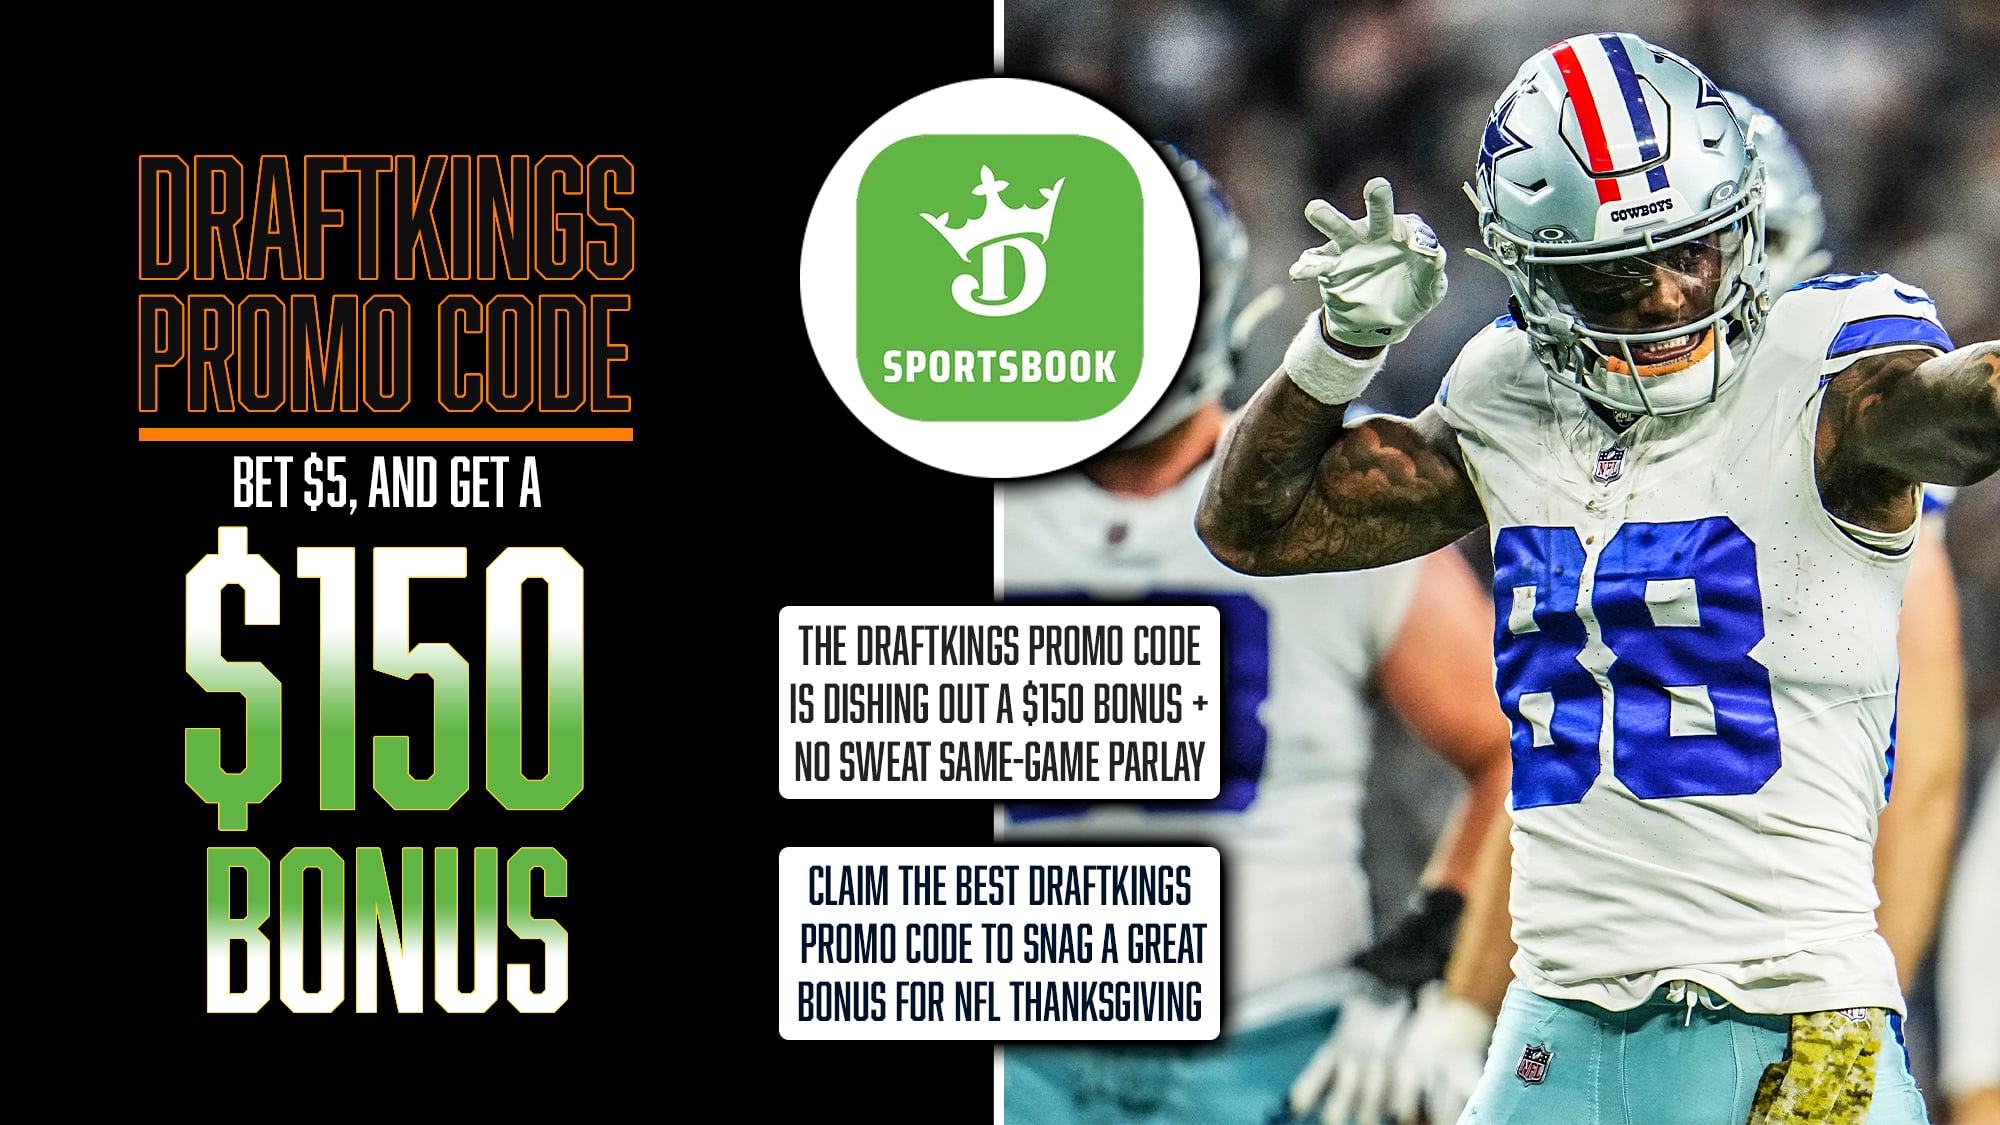 DraftKings Promo Code, Get $150 Instant Bonus, NFL Thanksgiving, Black Friday